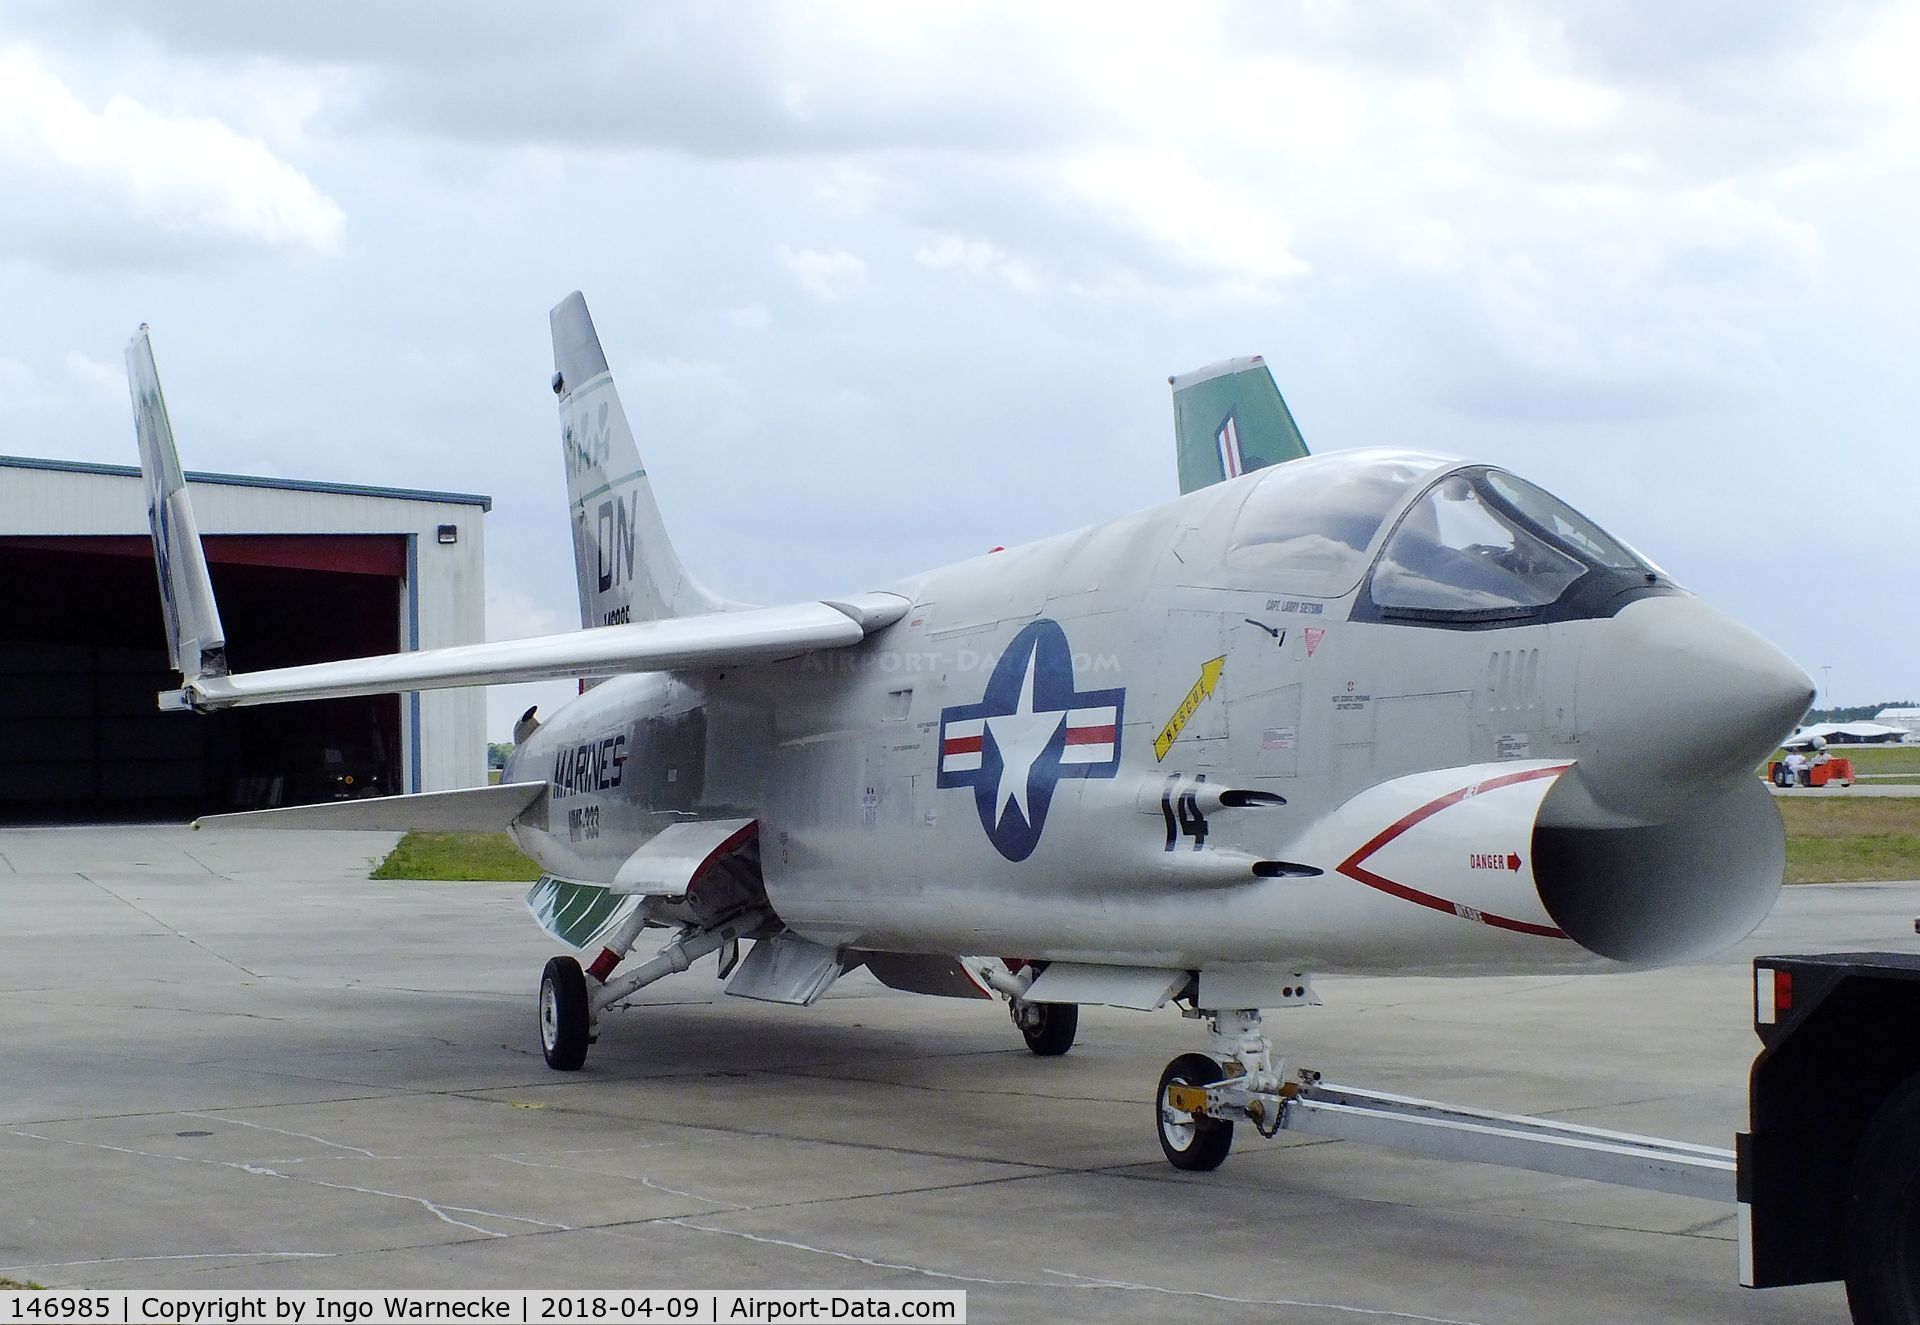 146985, Vought F-8K Crusader C/N 726, Vought F-8K Crusader at the VAC Warbird Museum, Titusville FL